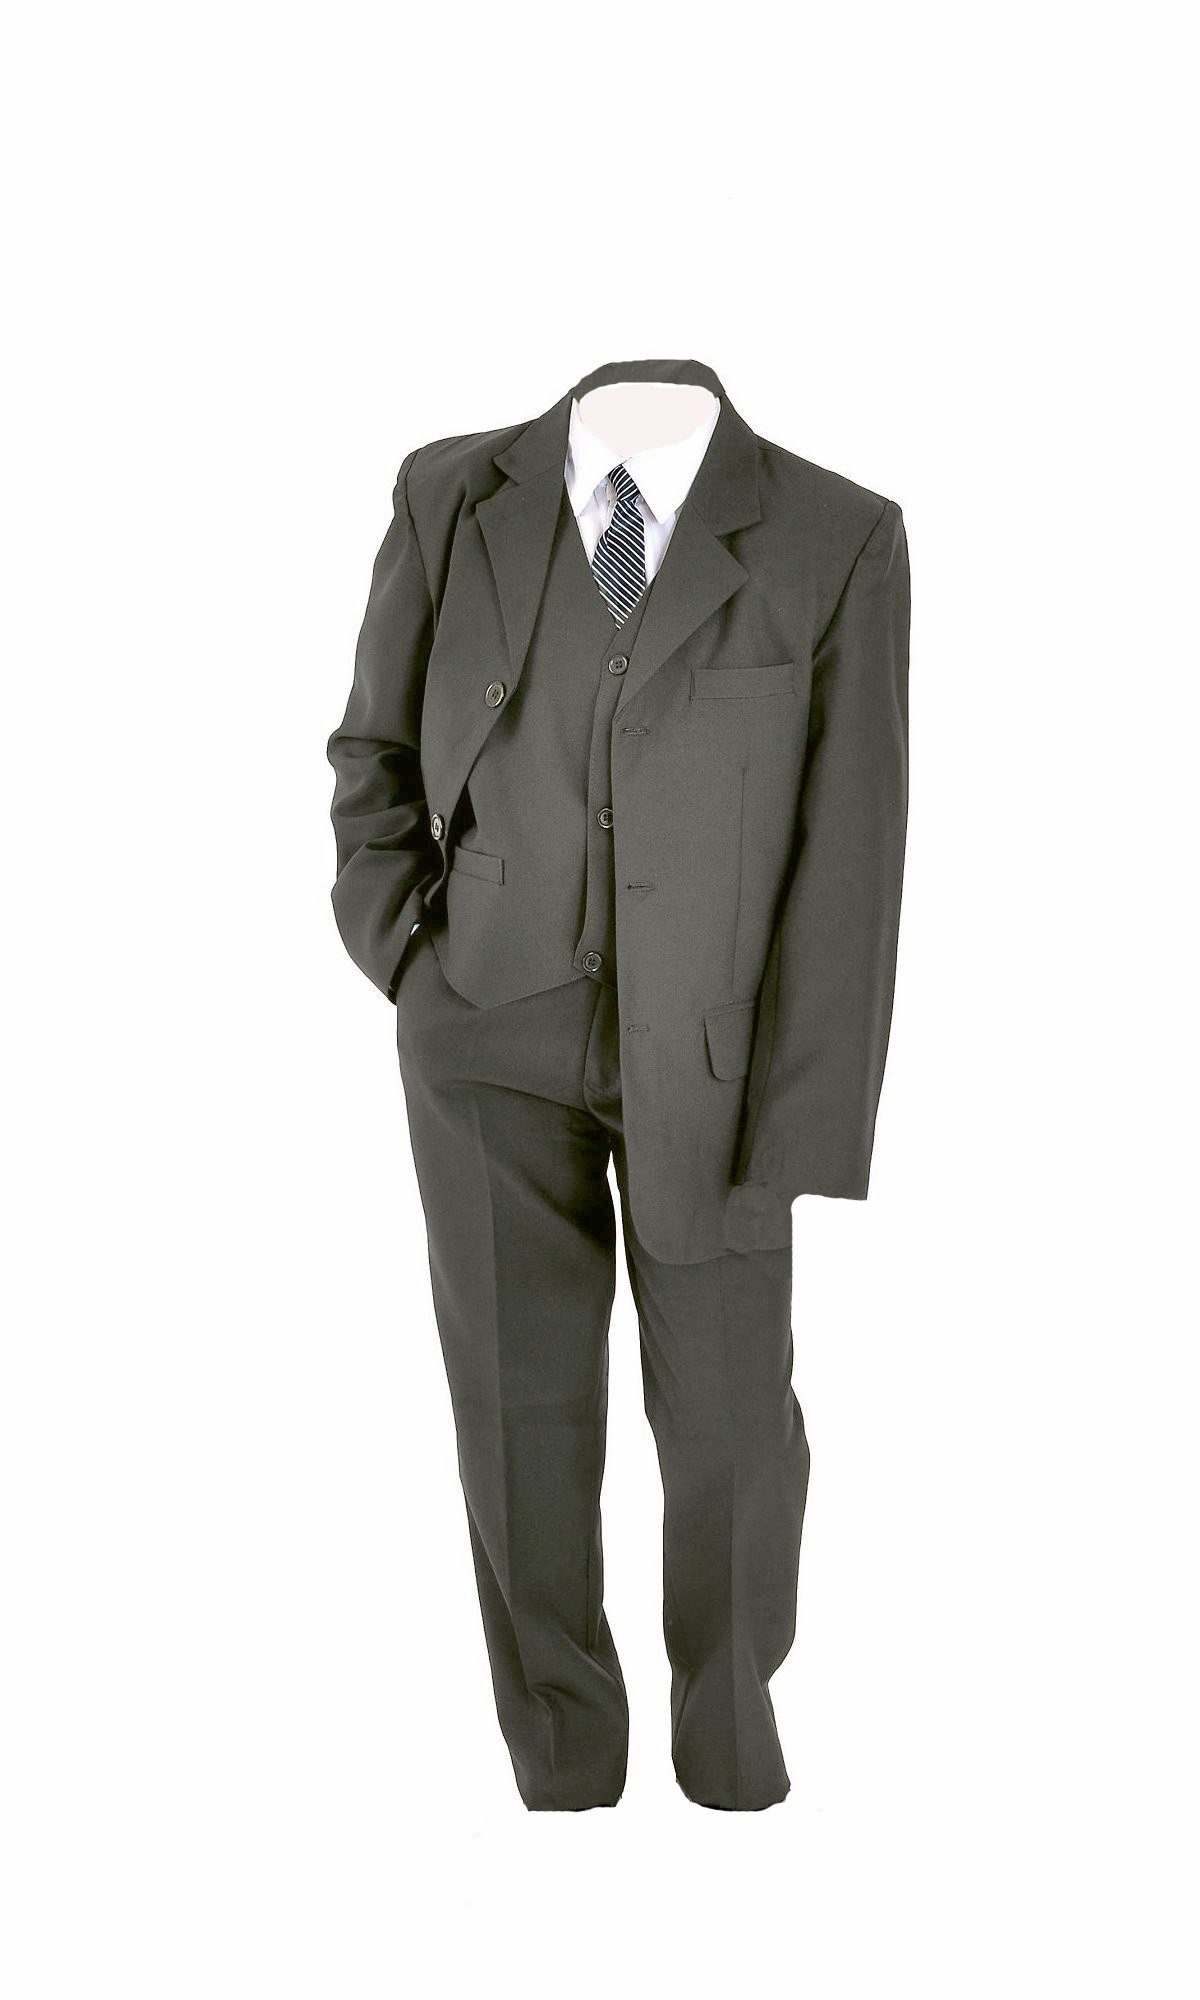 Family Trends Anzug Kombination Set Sakko Hemd Hose 5 Teilig Krawatte Weste